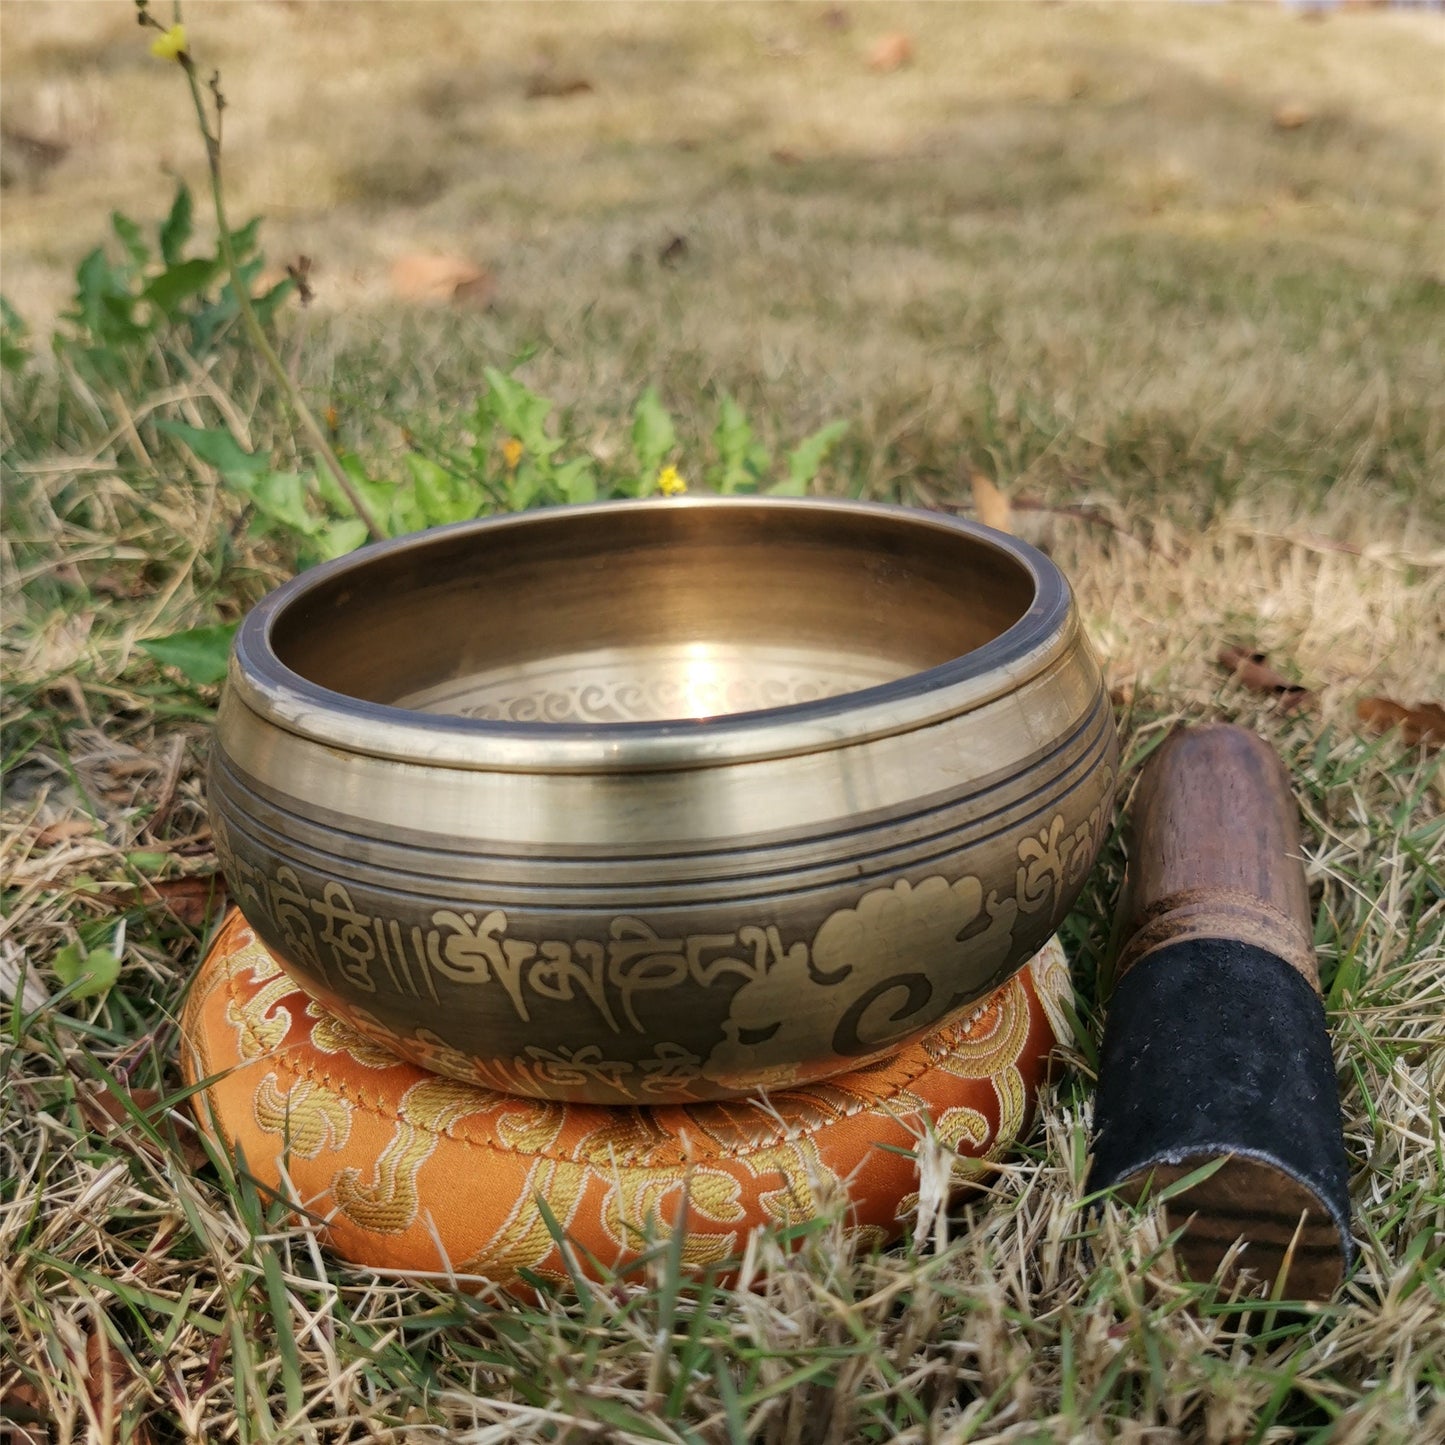 Gandhanra Classical Tibetan Singing Bowl with Amitayus Buddha Mandala Symbol,Handmade in Nepal